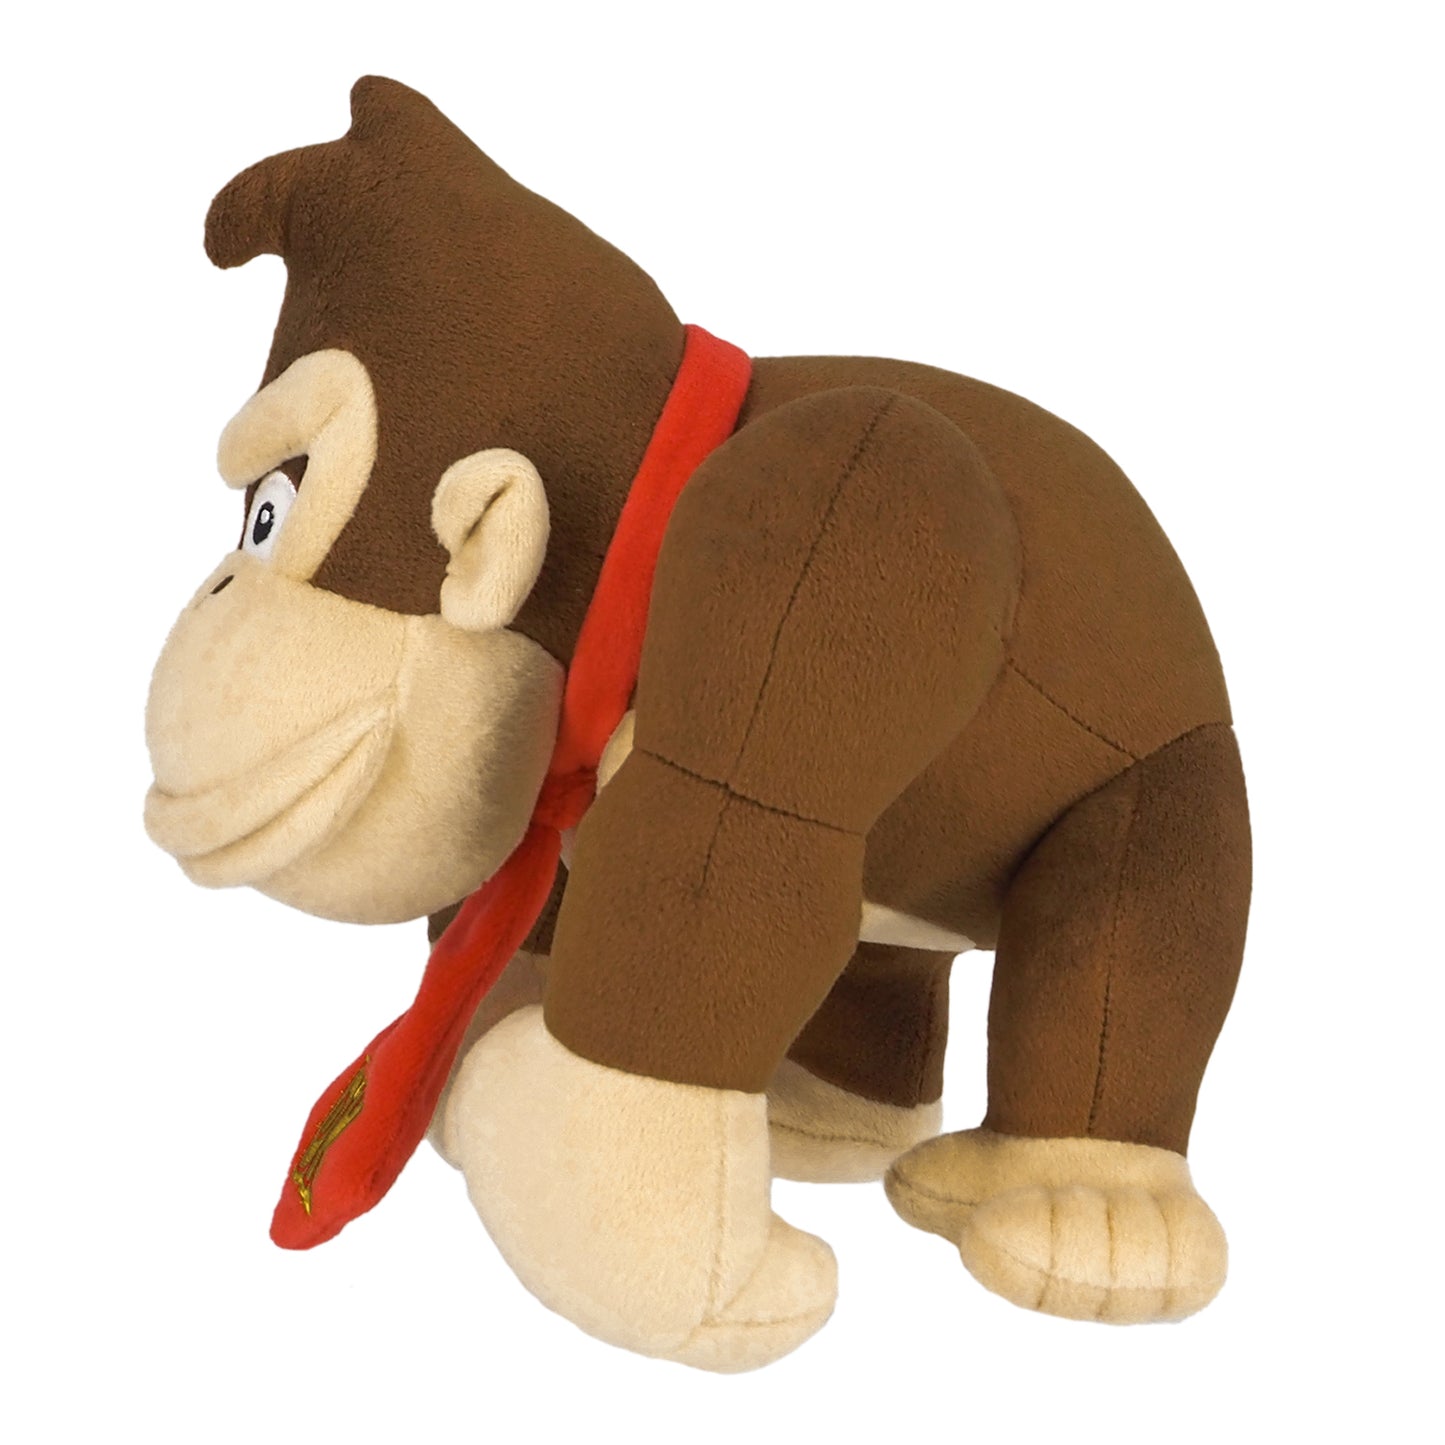 Super Mario Plush - Donkey Kong